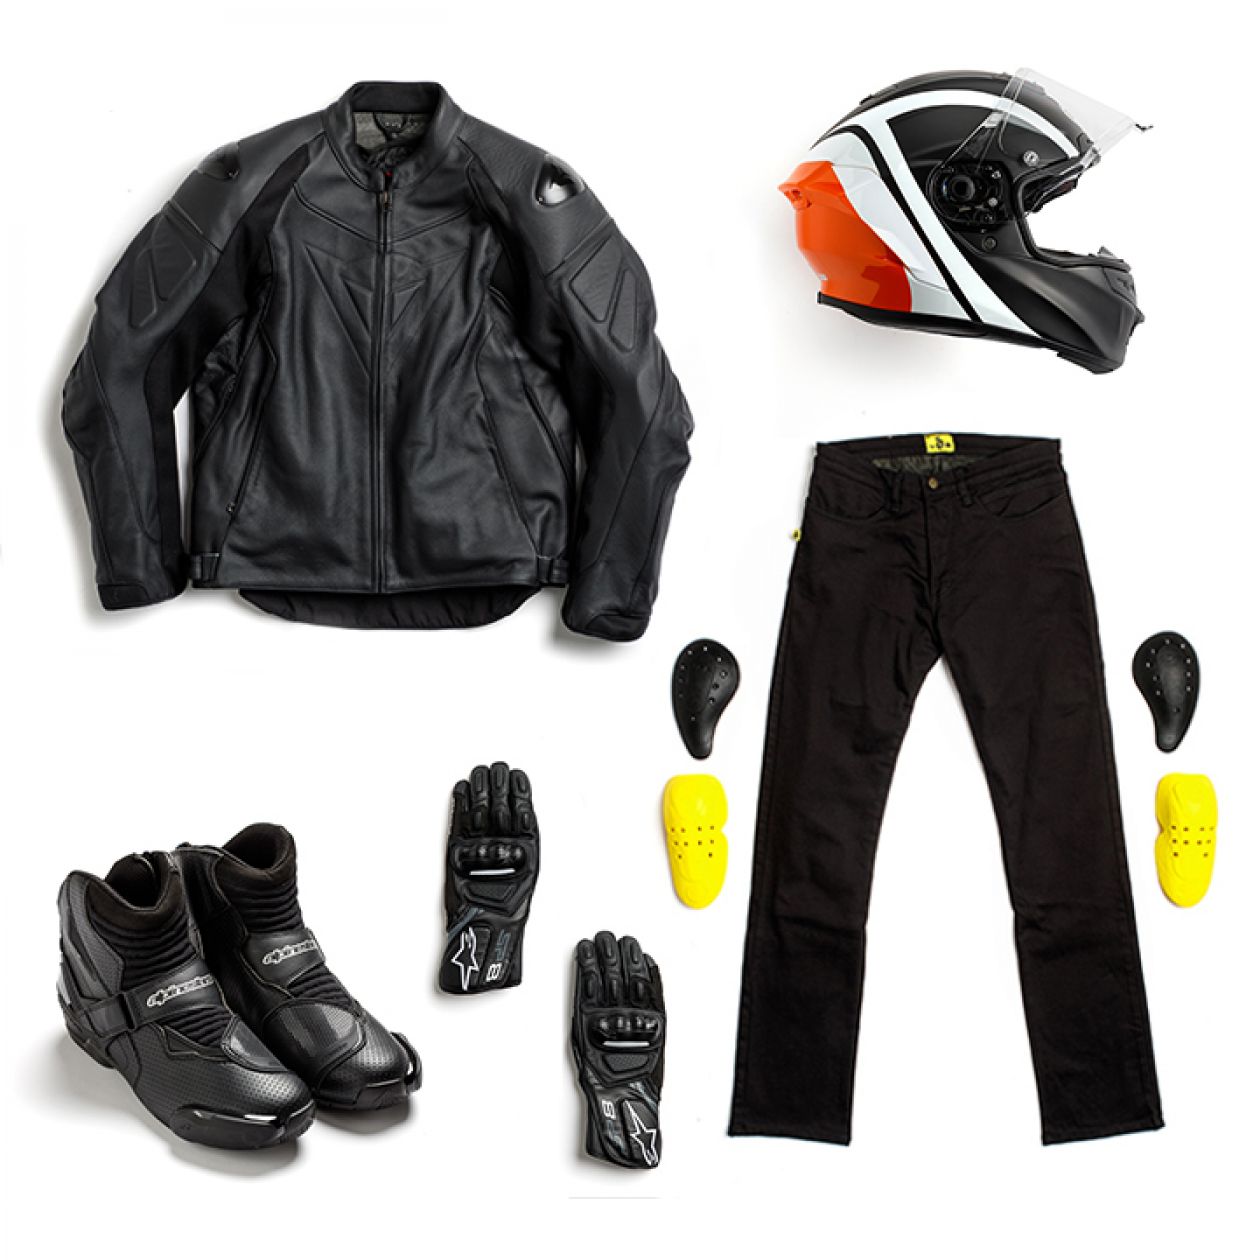 Motorbikes, gear, spokes, protective gear